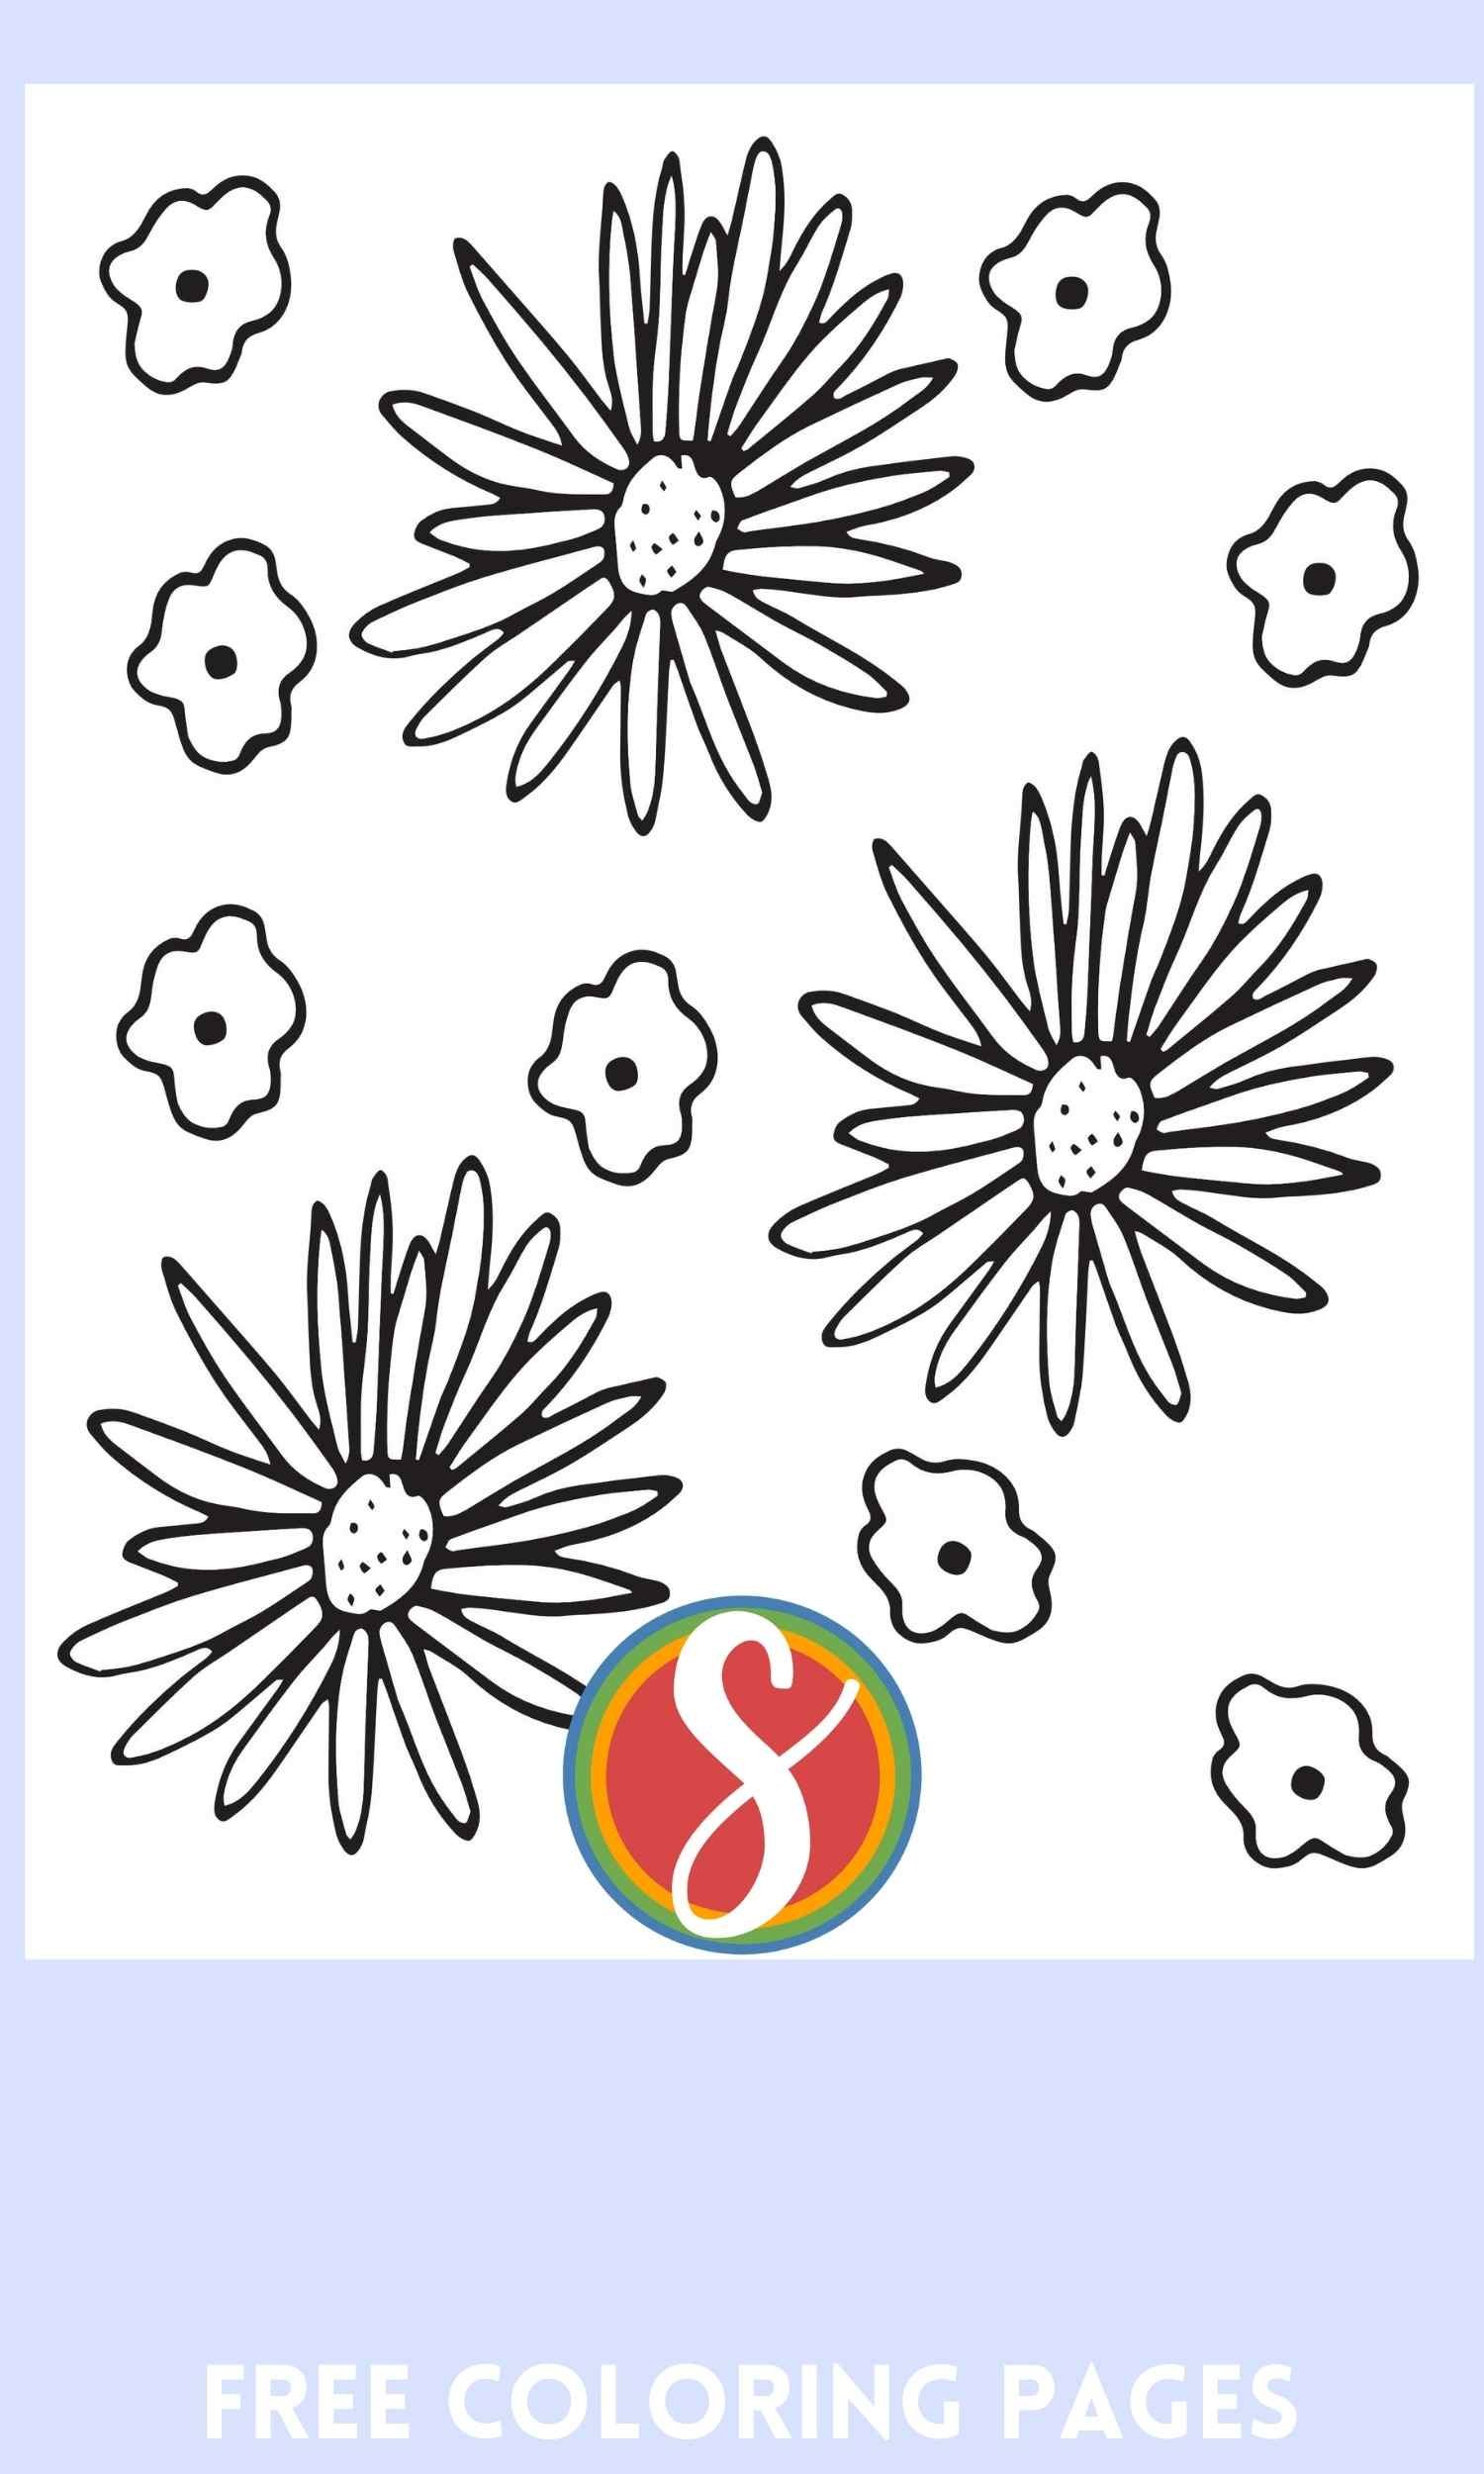 Free flower coloring pages â stevie doodles